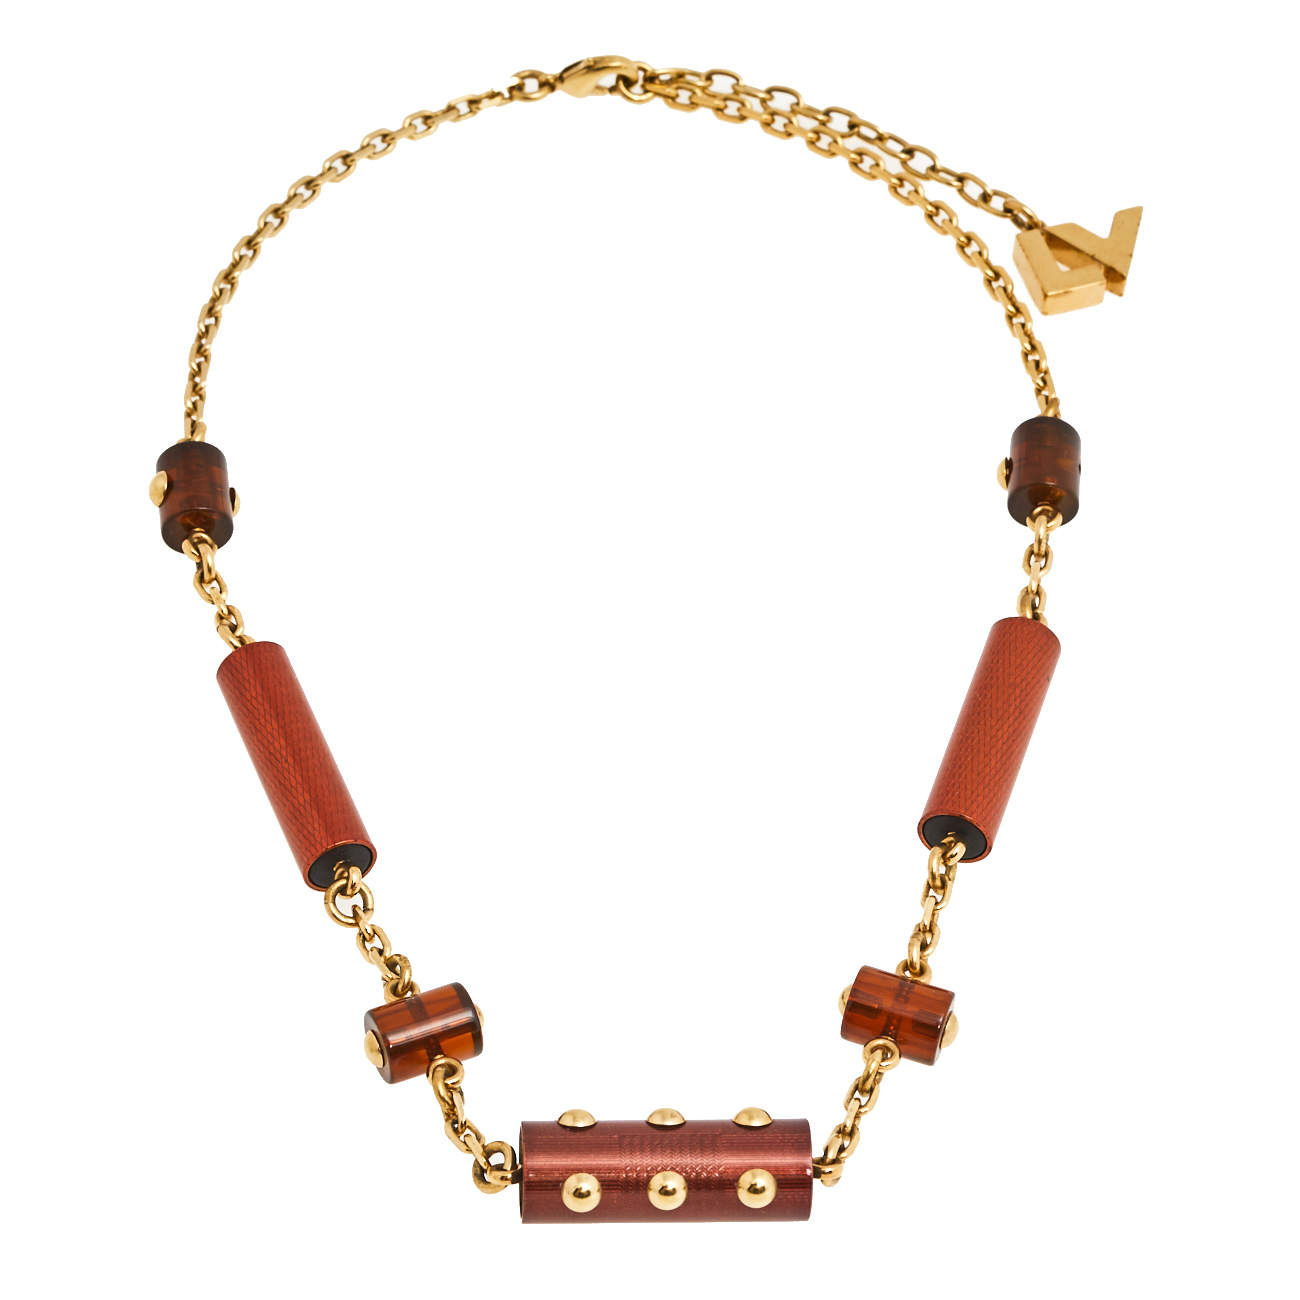 Monogram necklace Louis Vuitton Gold in Metal - 27038546